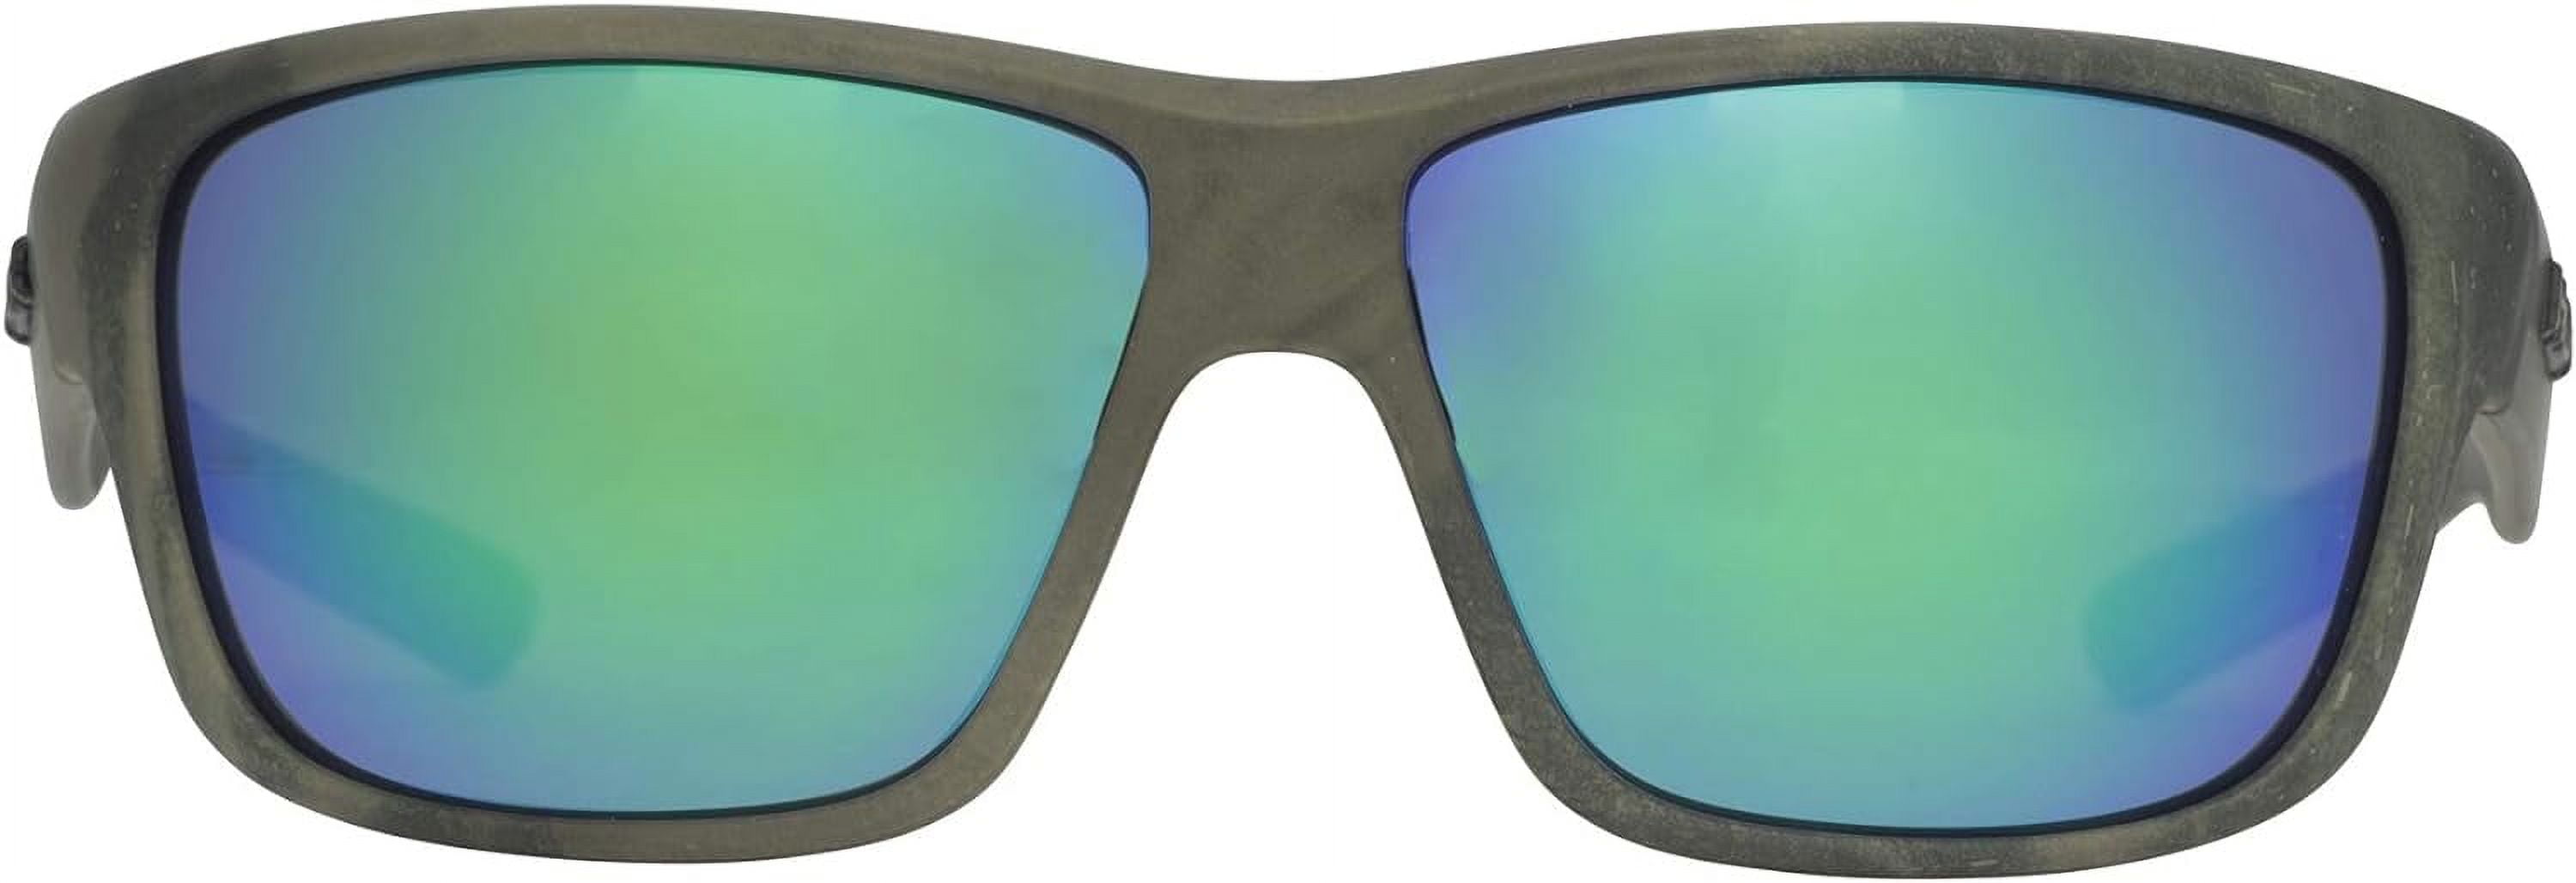 HUK, Polarized Lens Eyewear With Performance Frames, Fishing, Sports &  Outdoors Sunglasses (Spar) Green Mirror / Southern Tier Subphantis  Medium/Large 